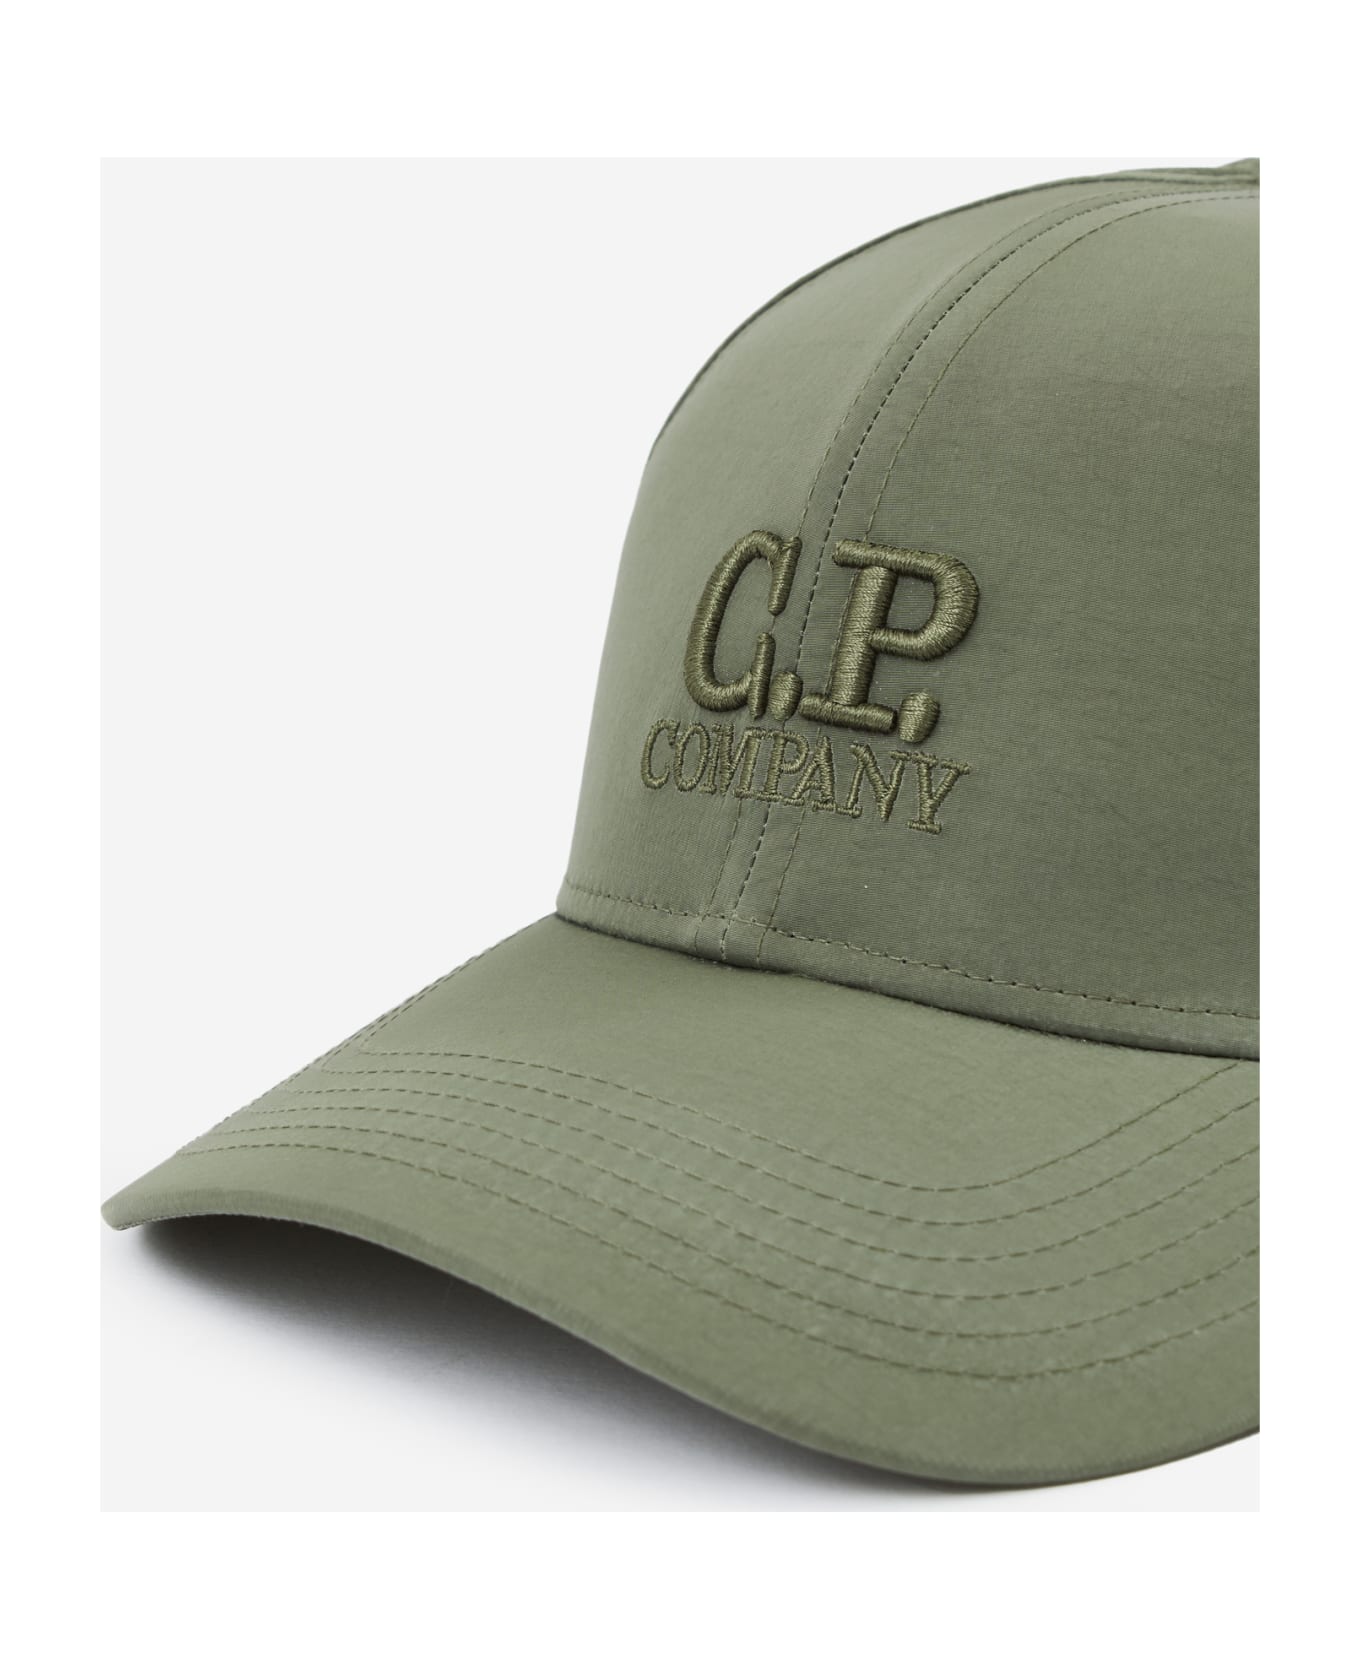 C.P. Company Hats - Agave Green